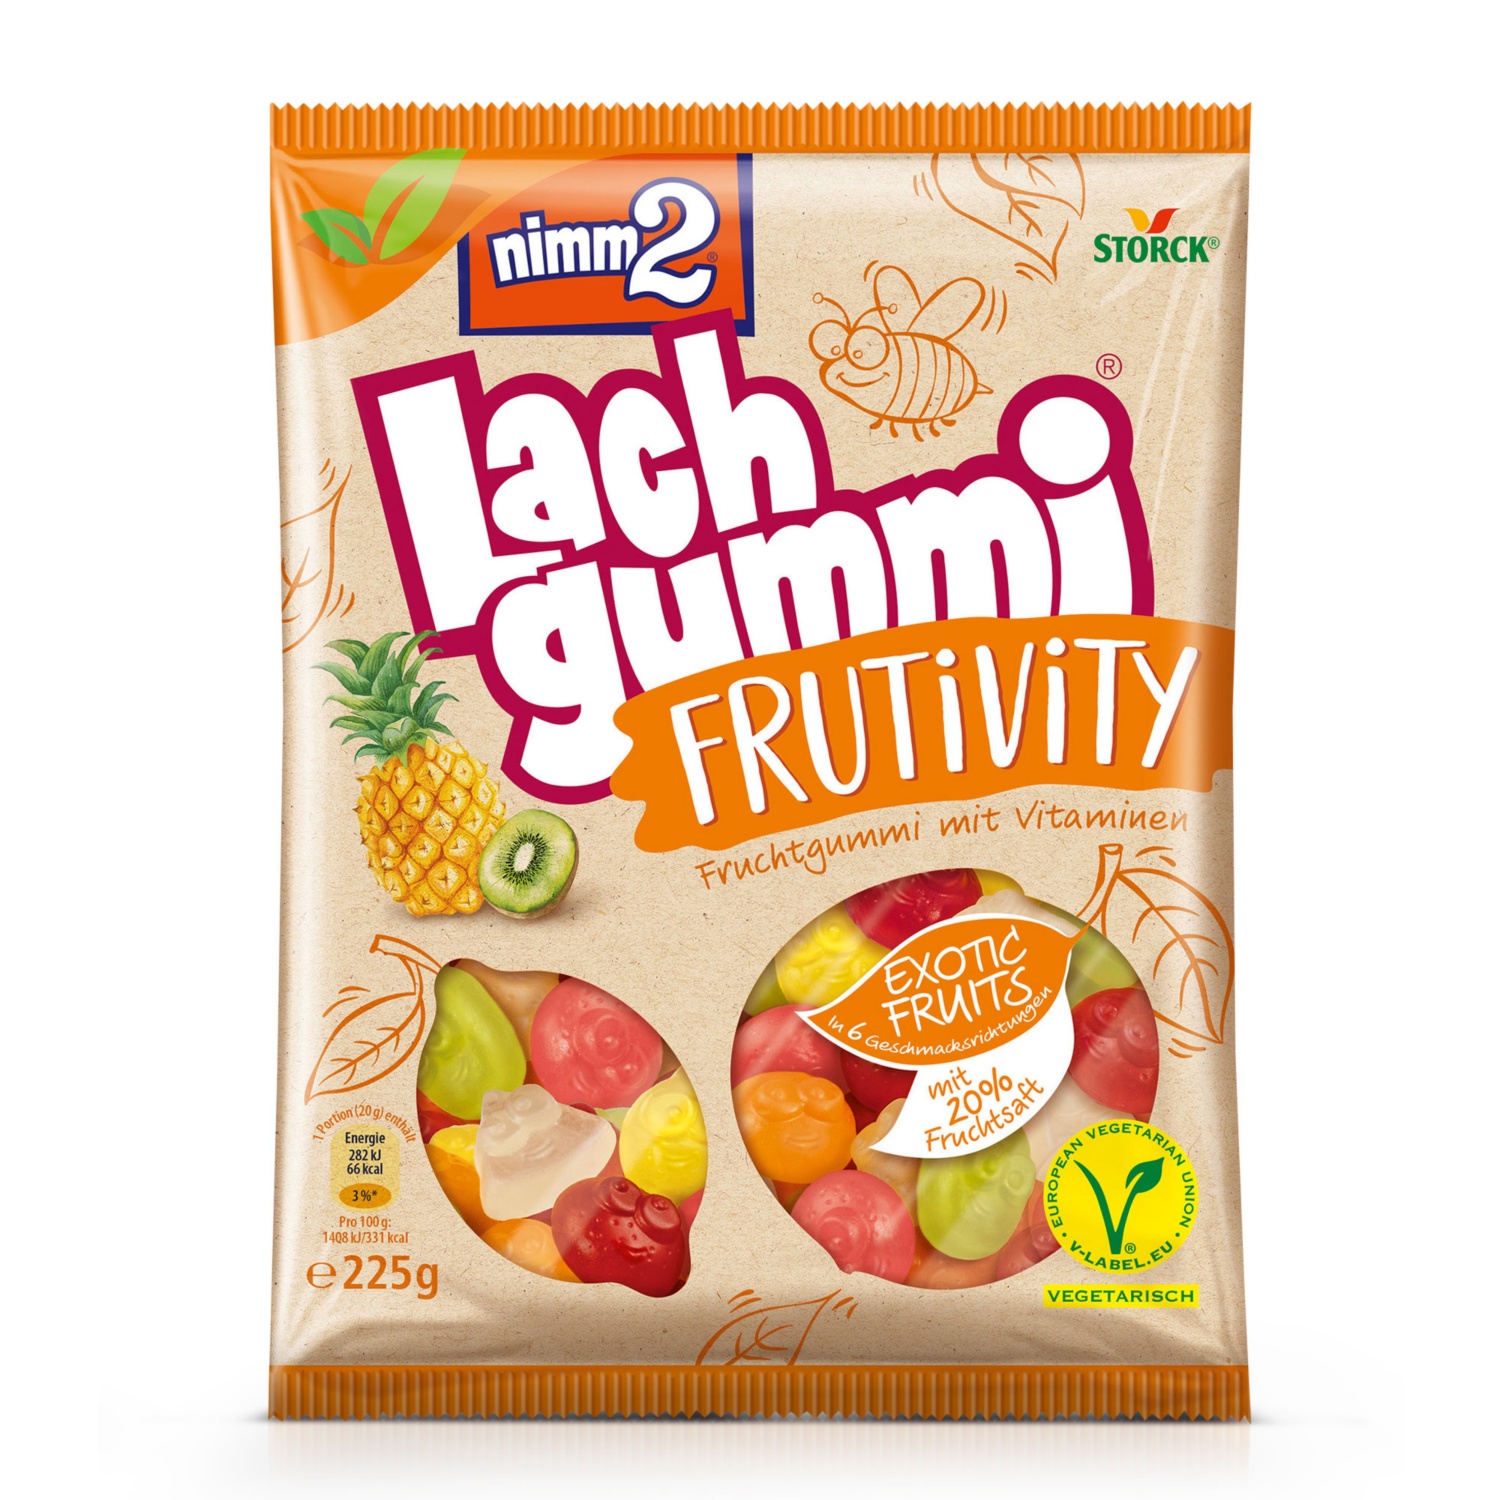 NIMM 2 Lachgummi Frutivity, Exotic Fruits